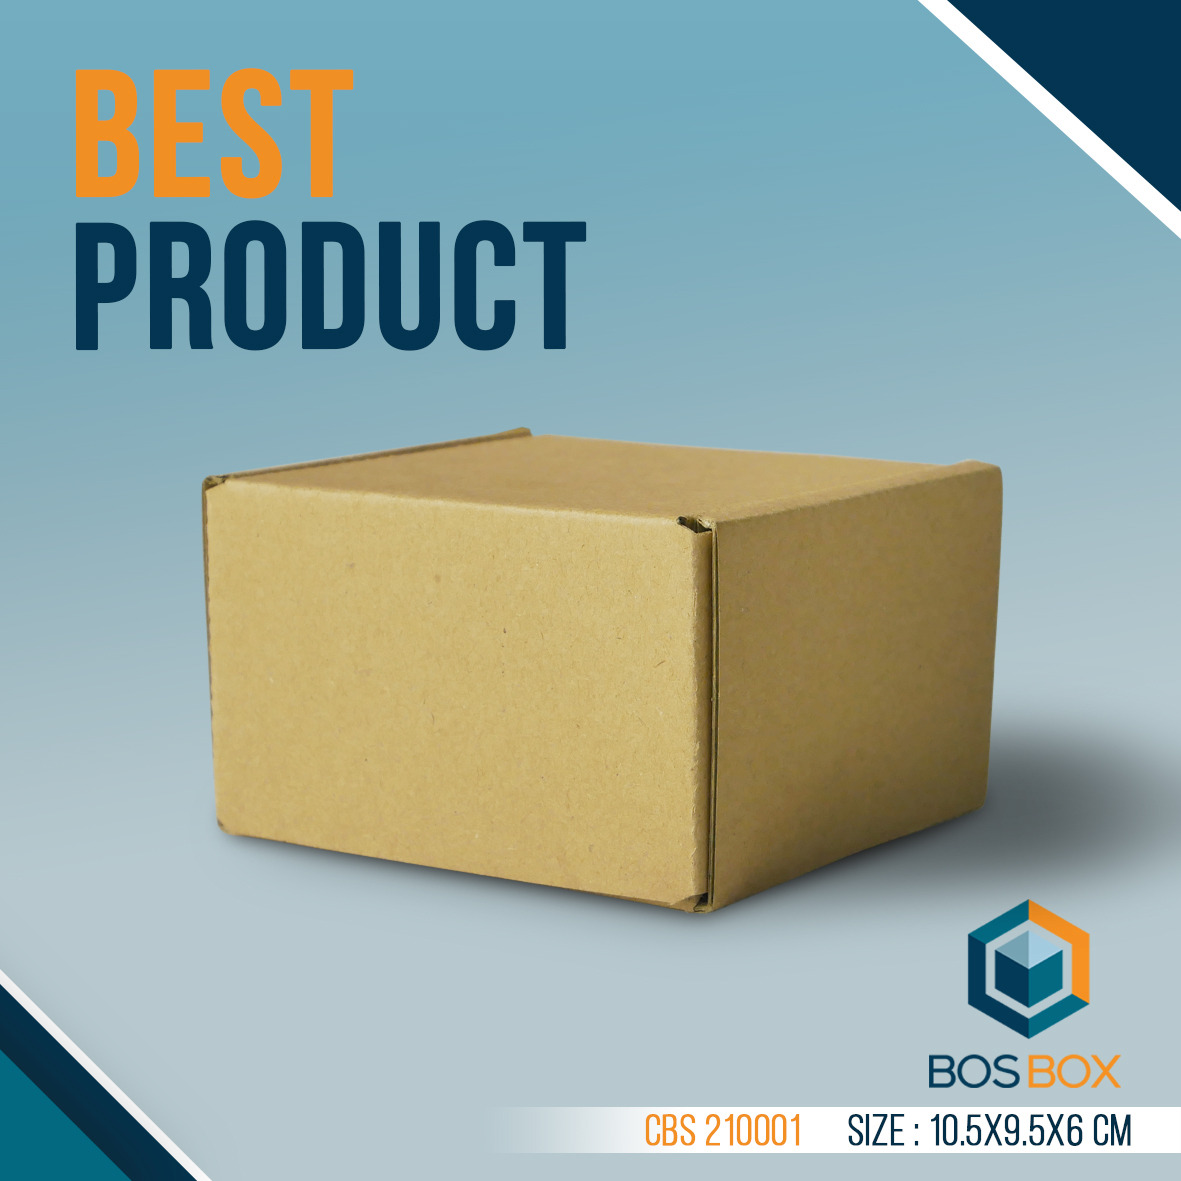 KOTAK SOUVENIR - BOX SOUVENIR 
CBS2100001
 #bosbox #packaging #boxsouvenir #packagingideas #DeadlineDay